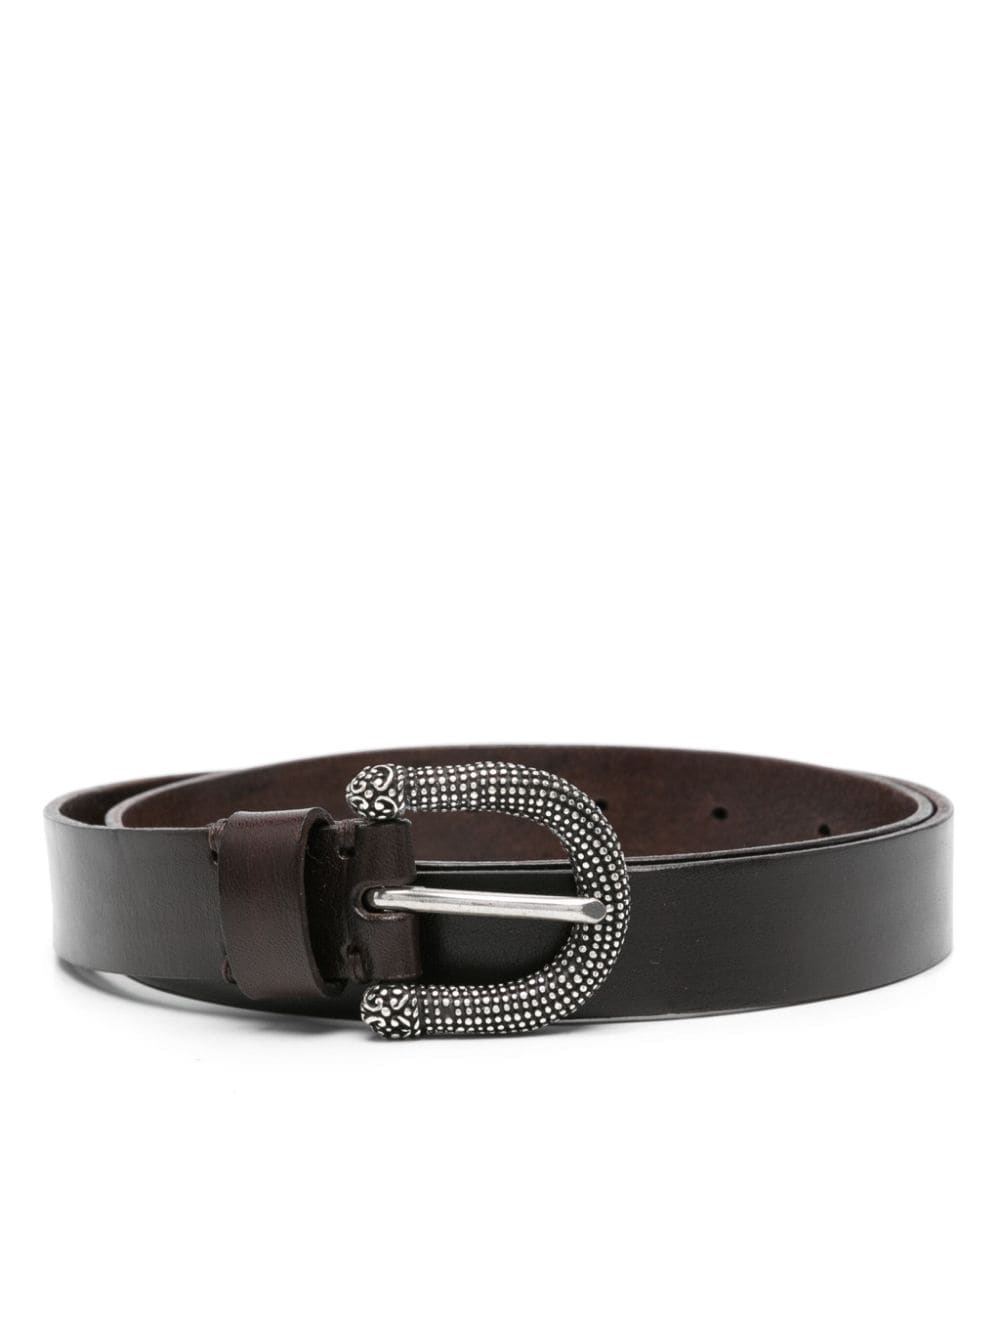 P.A.R.O.S.H. buckle leather belt - Brown von P.A.R.O.S.H.